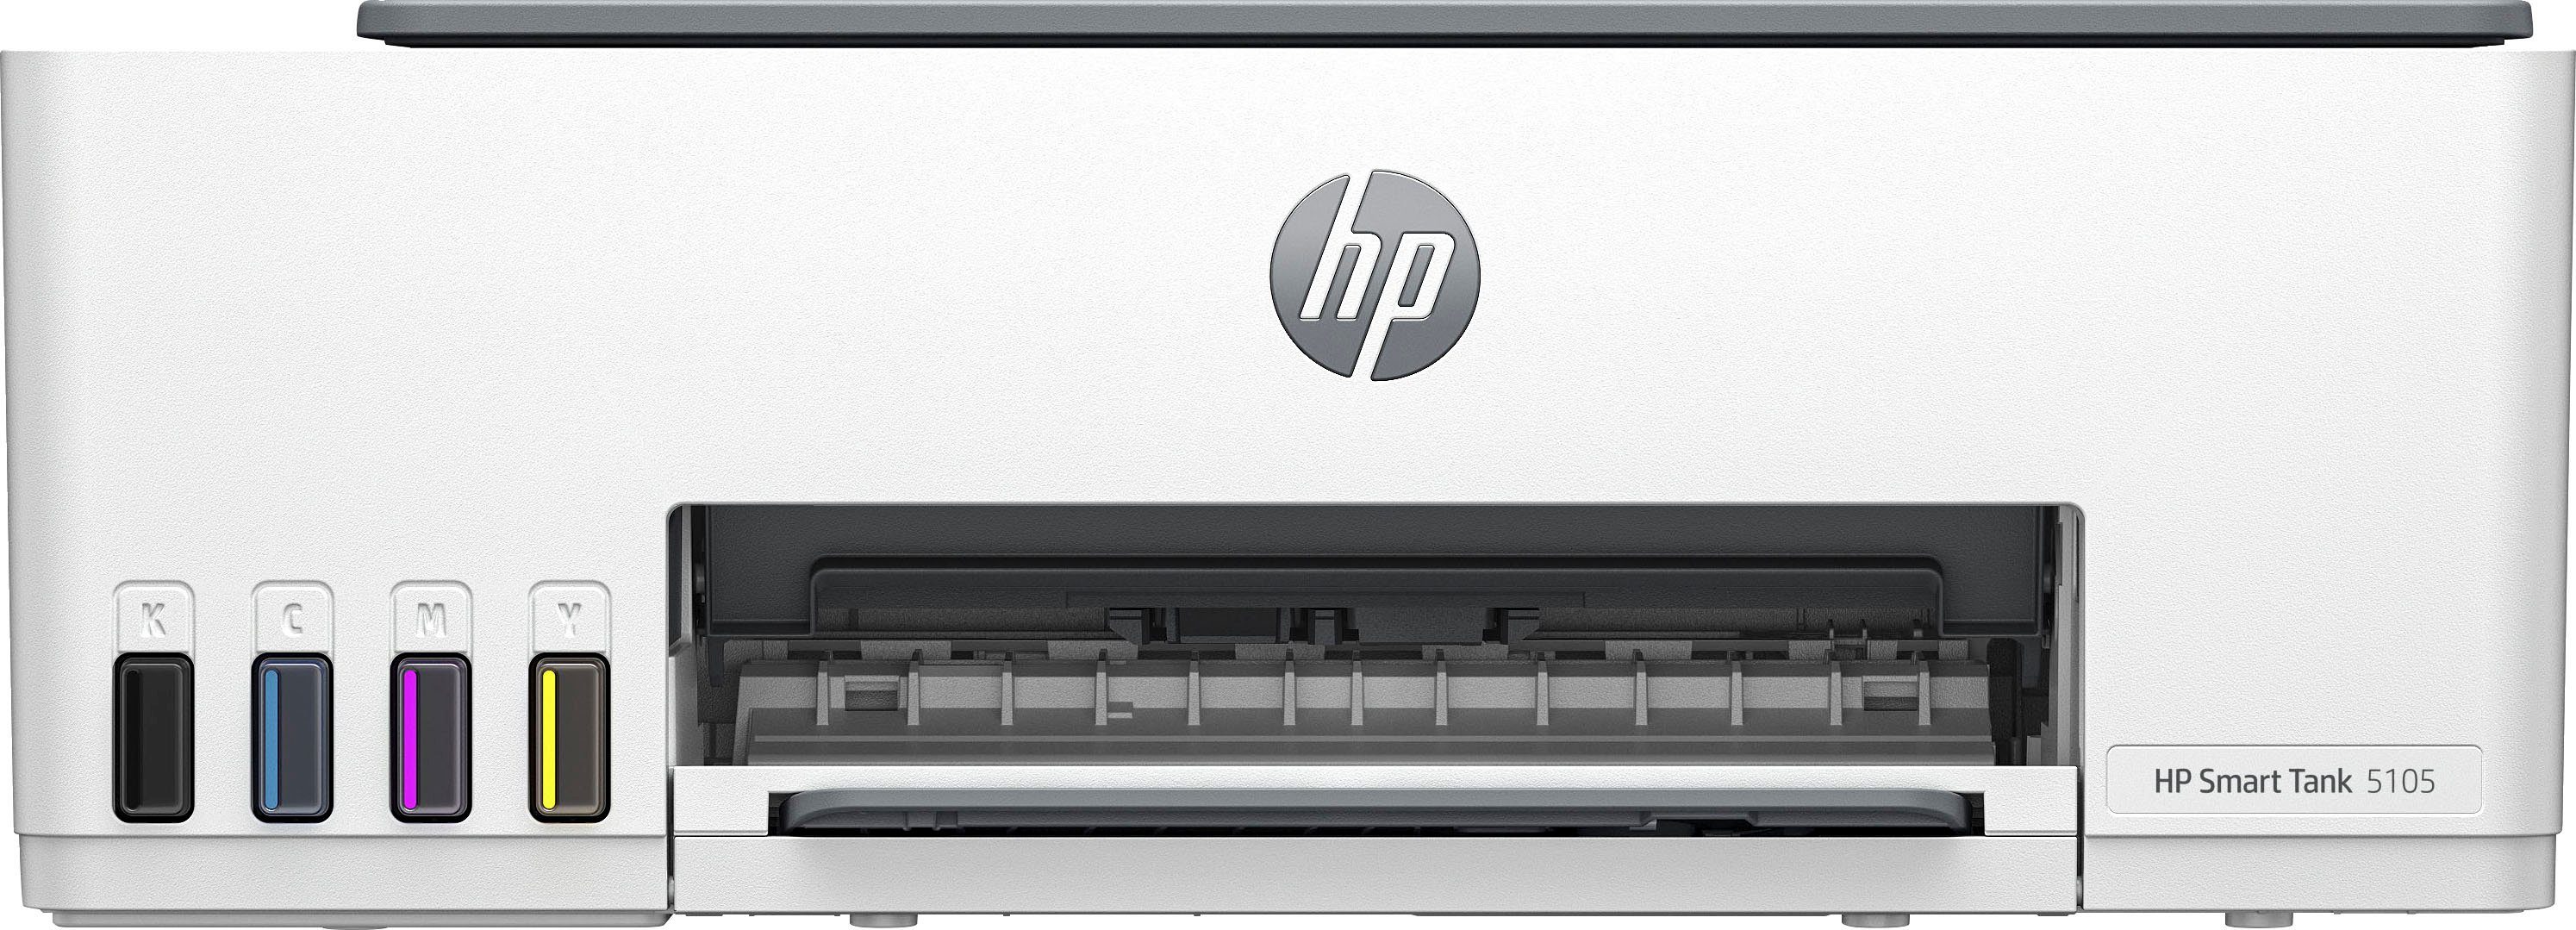 (Wi-Fi), HP Ink HP kompatibel) 5105 Tank Instant WLAN Smart (Bluetooth, Multifunktionsdrucker,